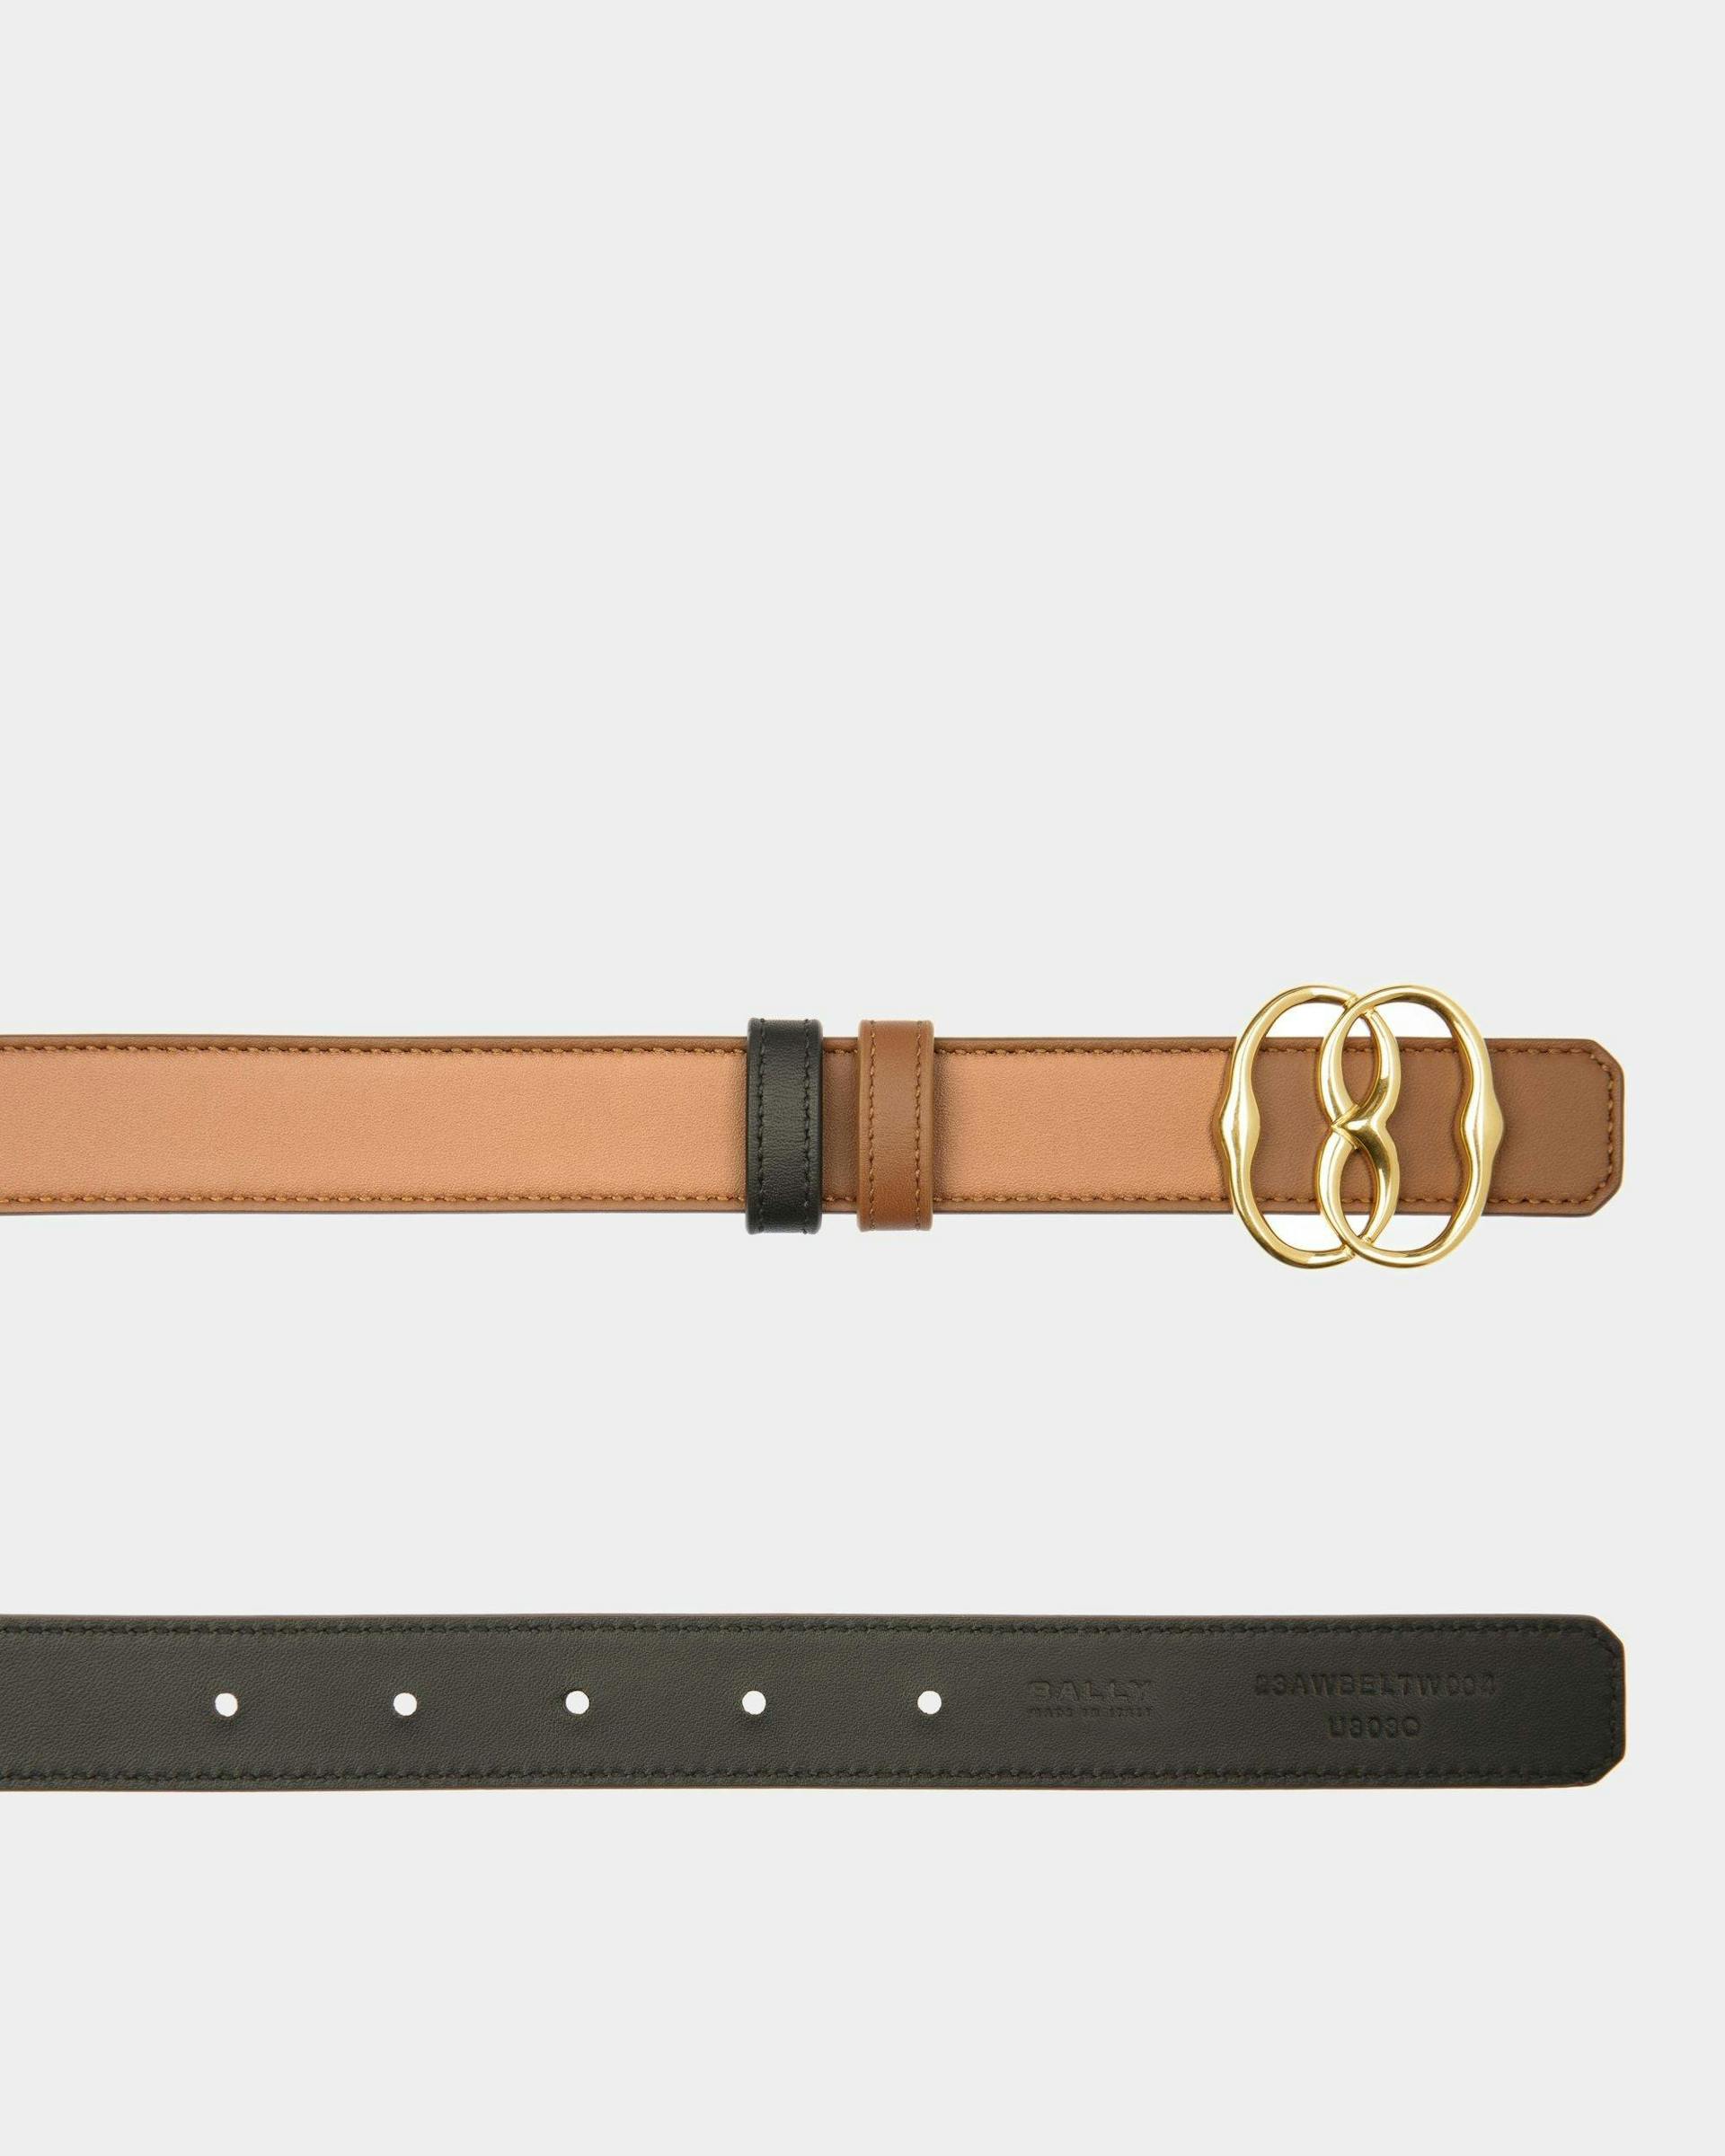 Women's Emblem 25mm Belt In Brown Leather | Bally | Still Life Detail